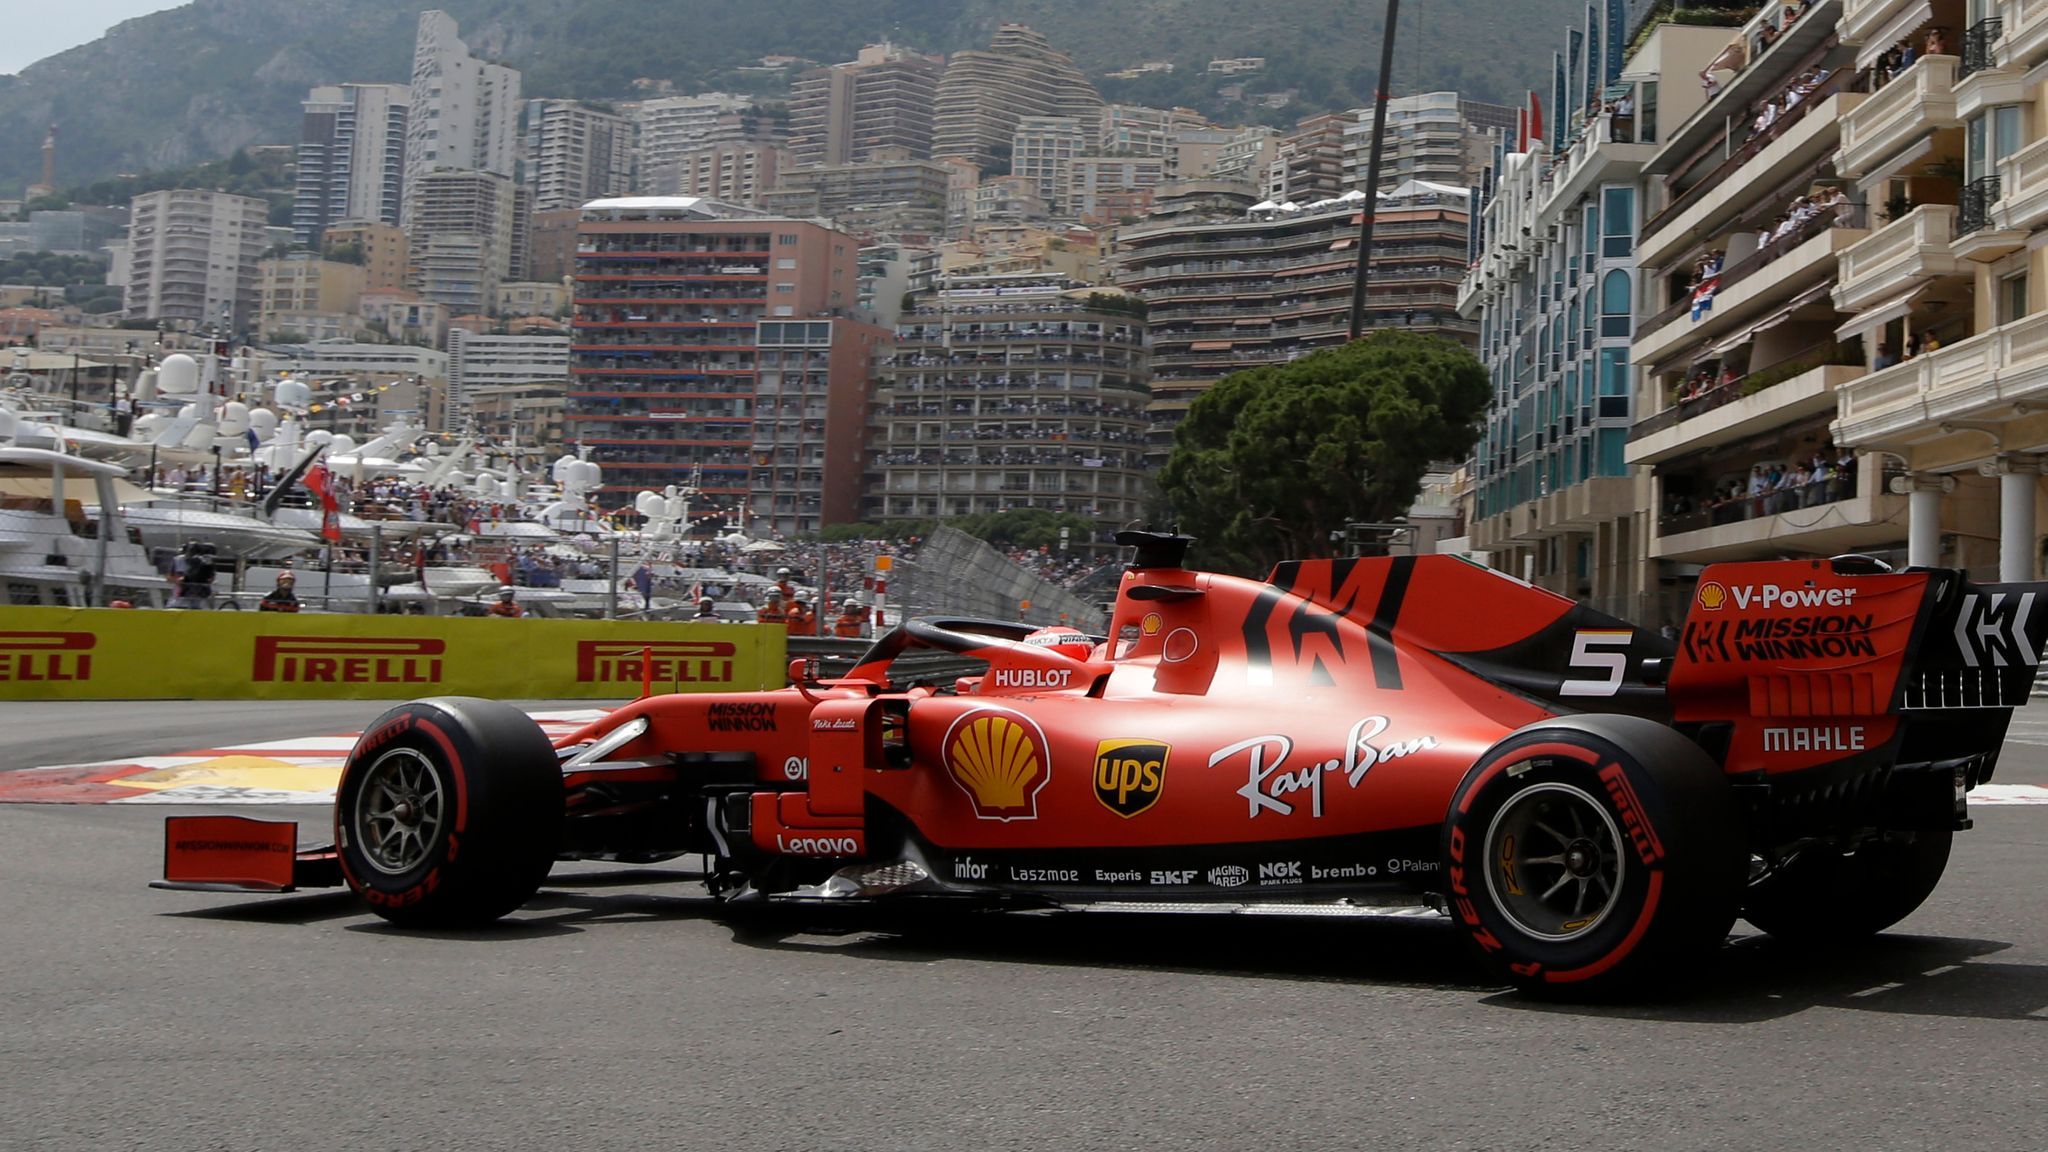 Monaco GP: F1 Returns To The World Famous Streets Of The Principality For Blockbuster Leg Of 2021 Season